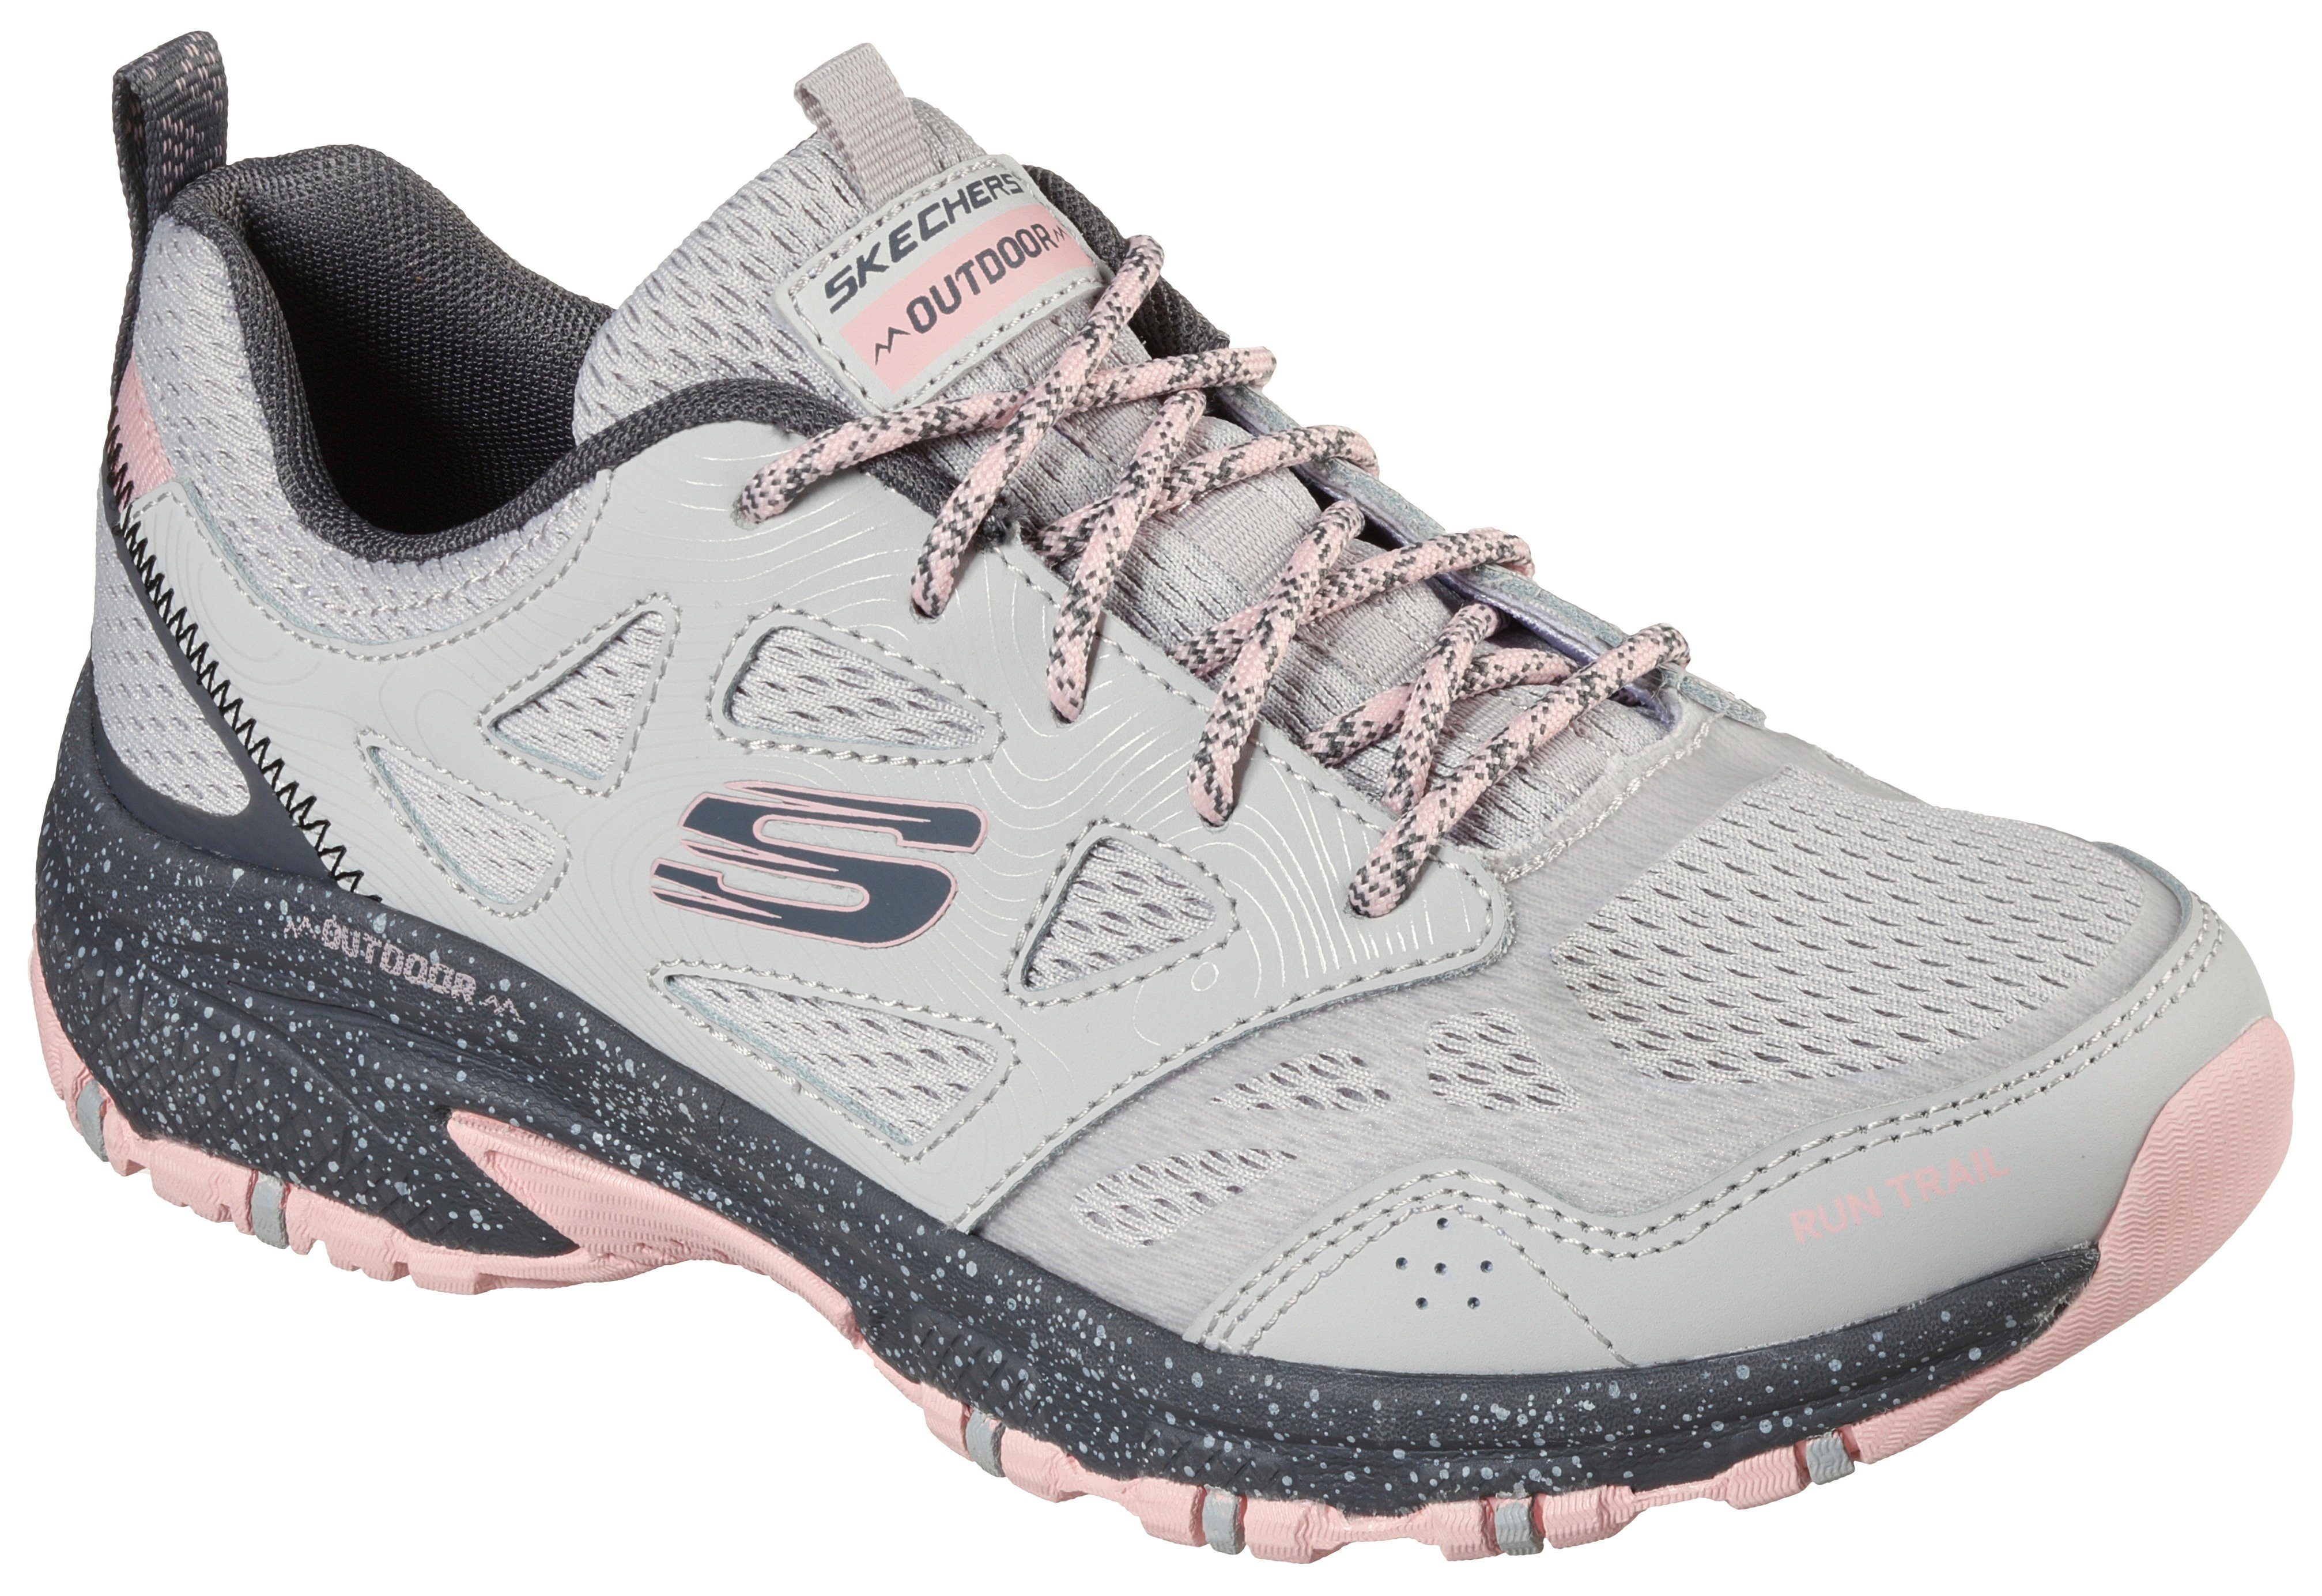 Skechers HILLCREST PURE ESCAPADE Sneaker im Materialmix grau-pink